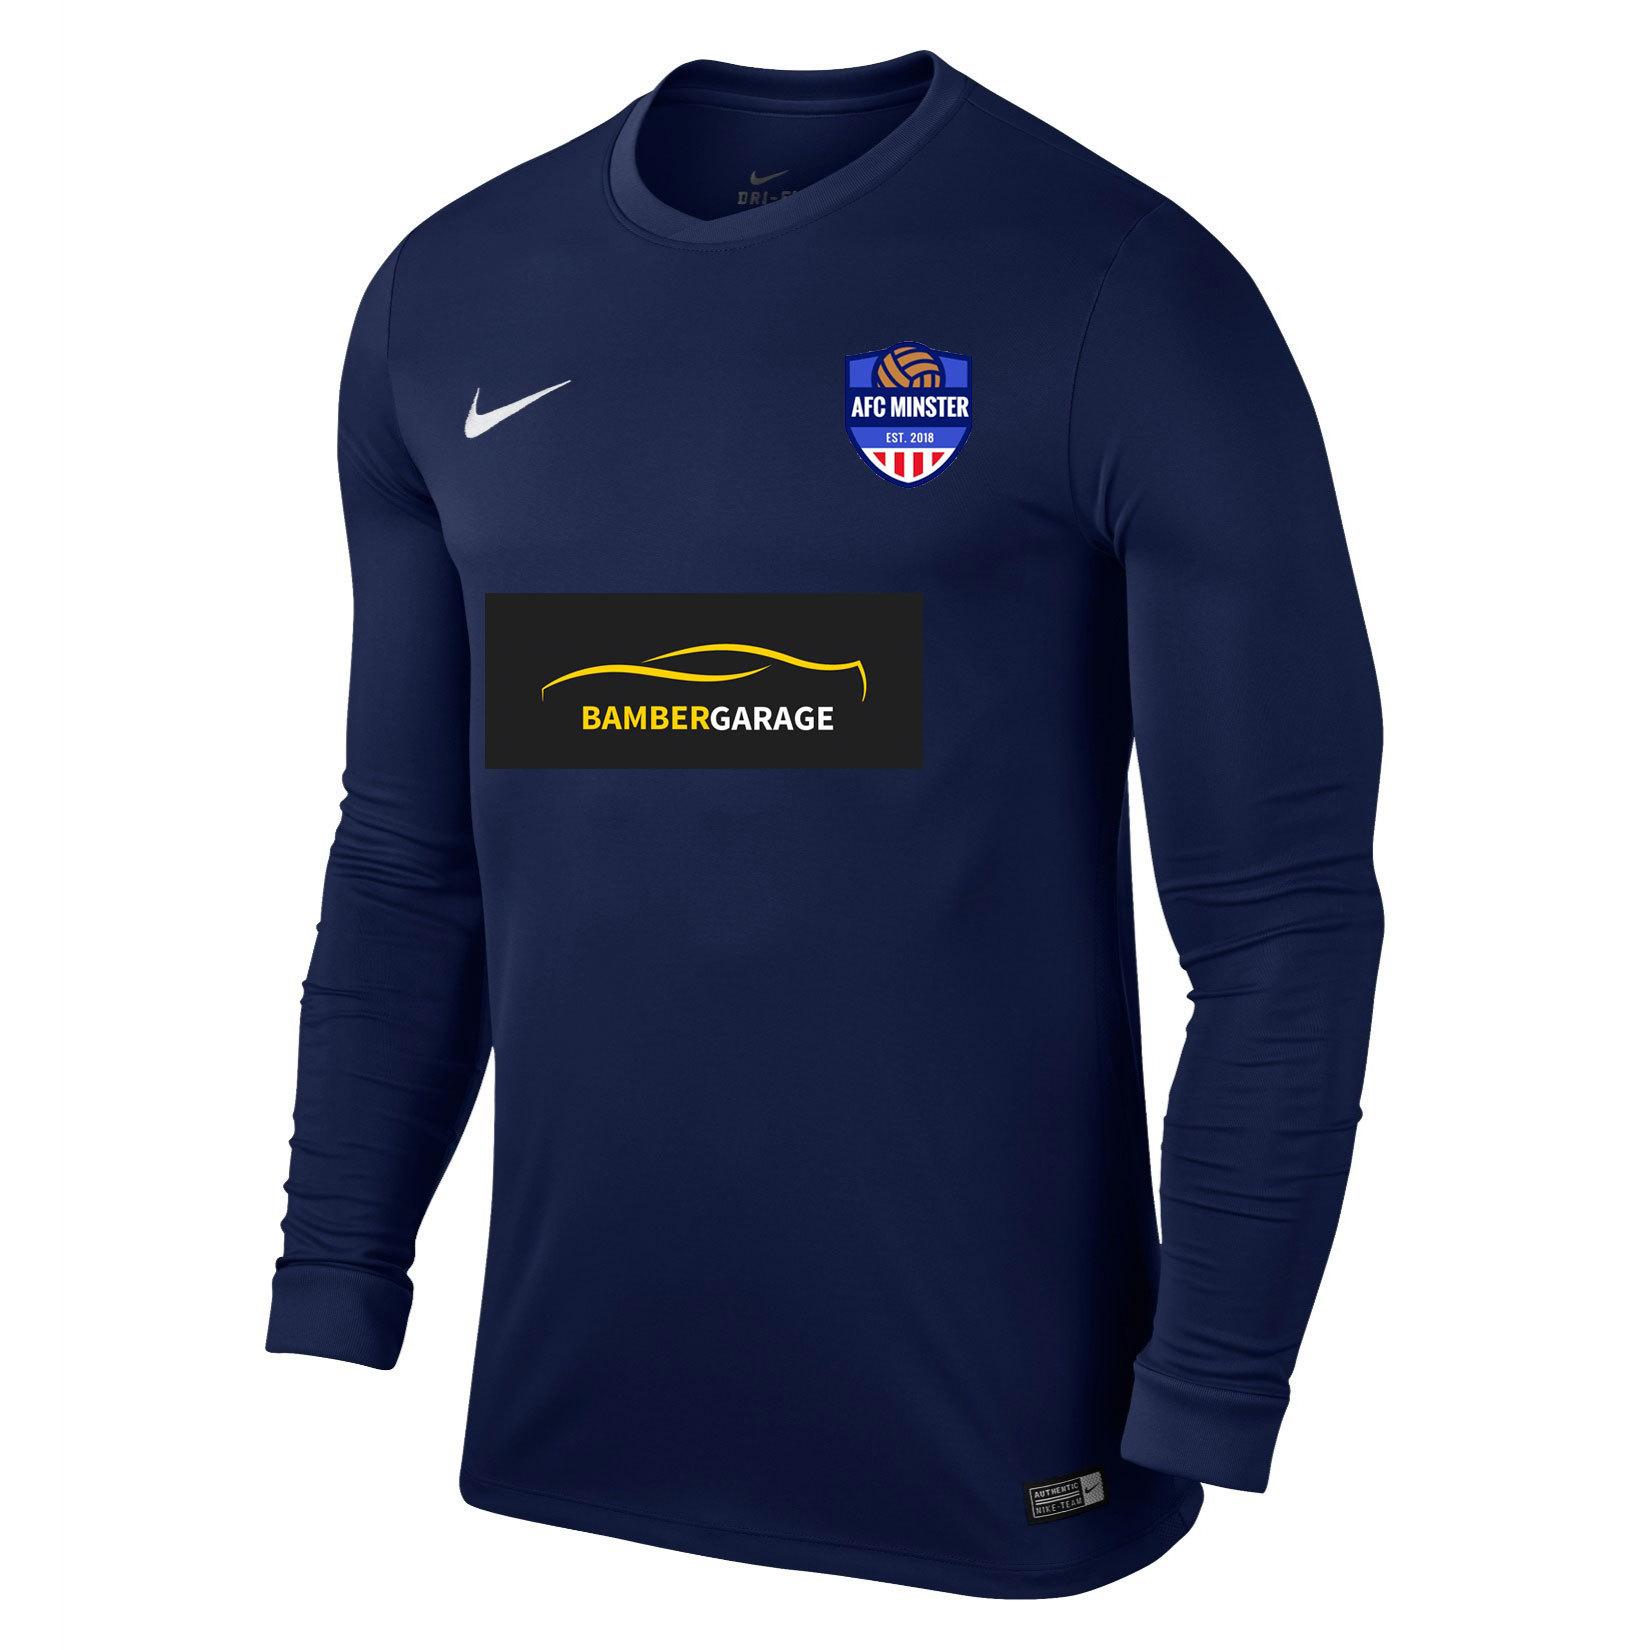 Nike Park VI Long Sleeve Football Shirt